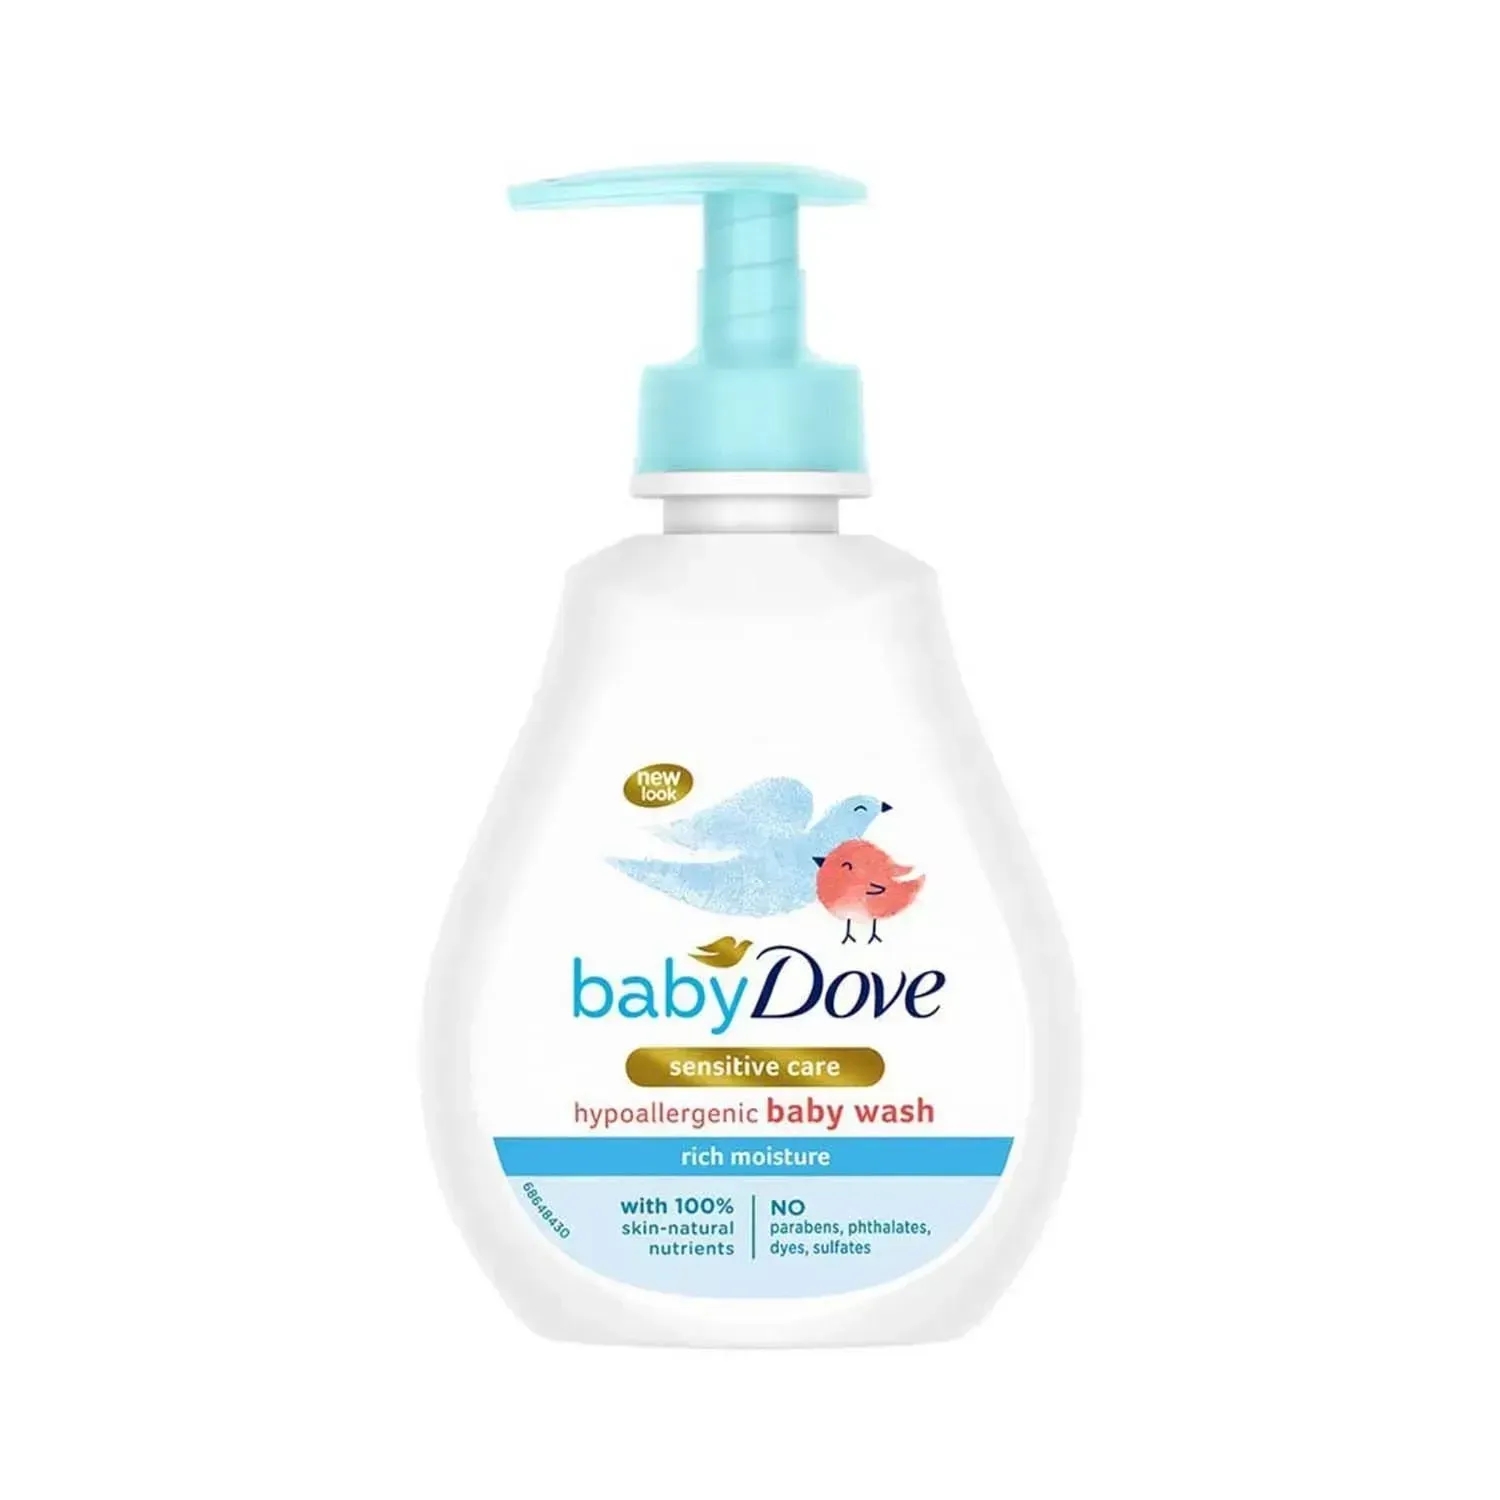 Baby Dove | Baby Dove Rich Moisture Hair to Toe Baby Wash - (200ml)